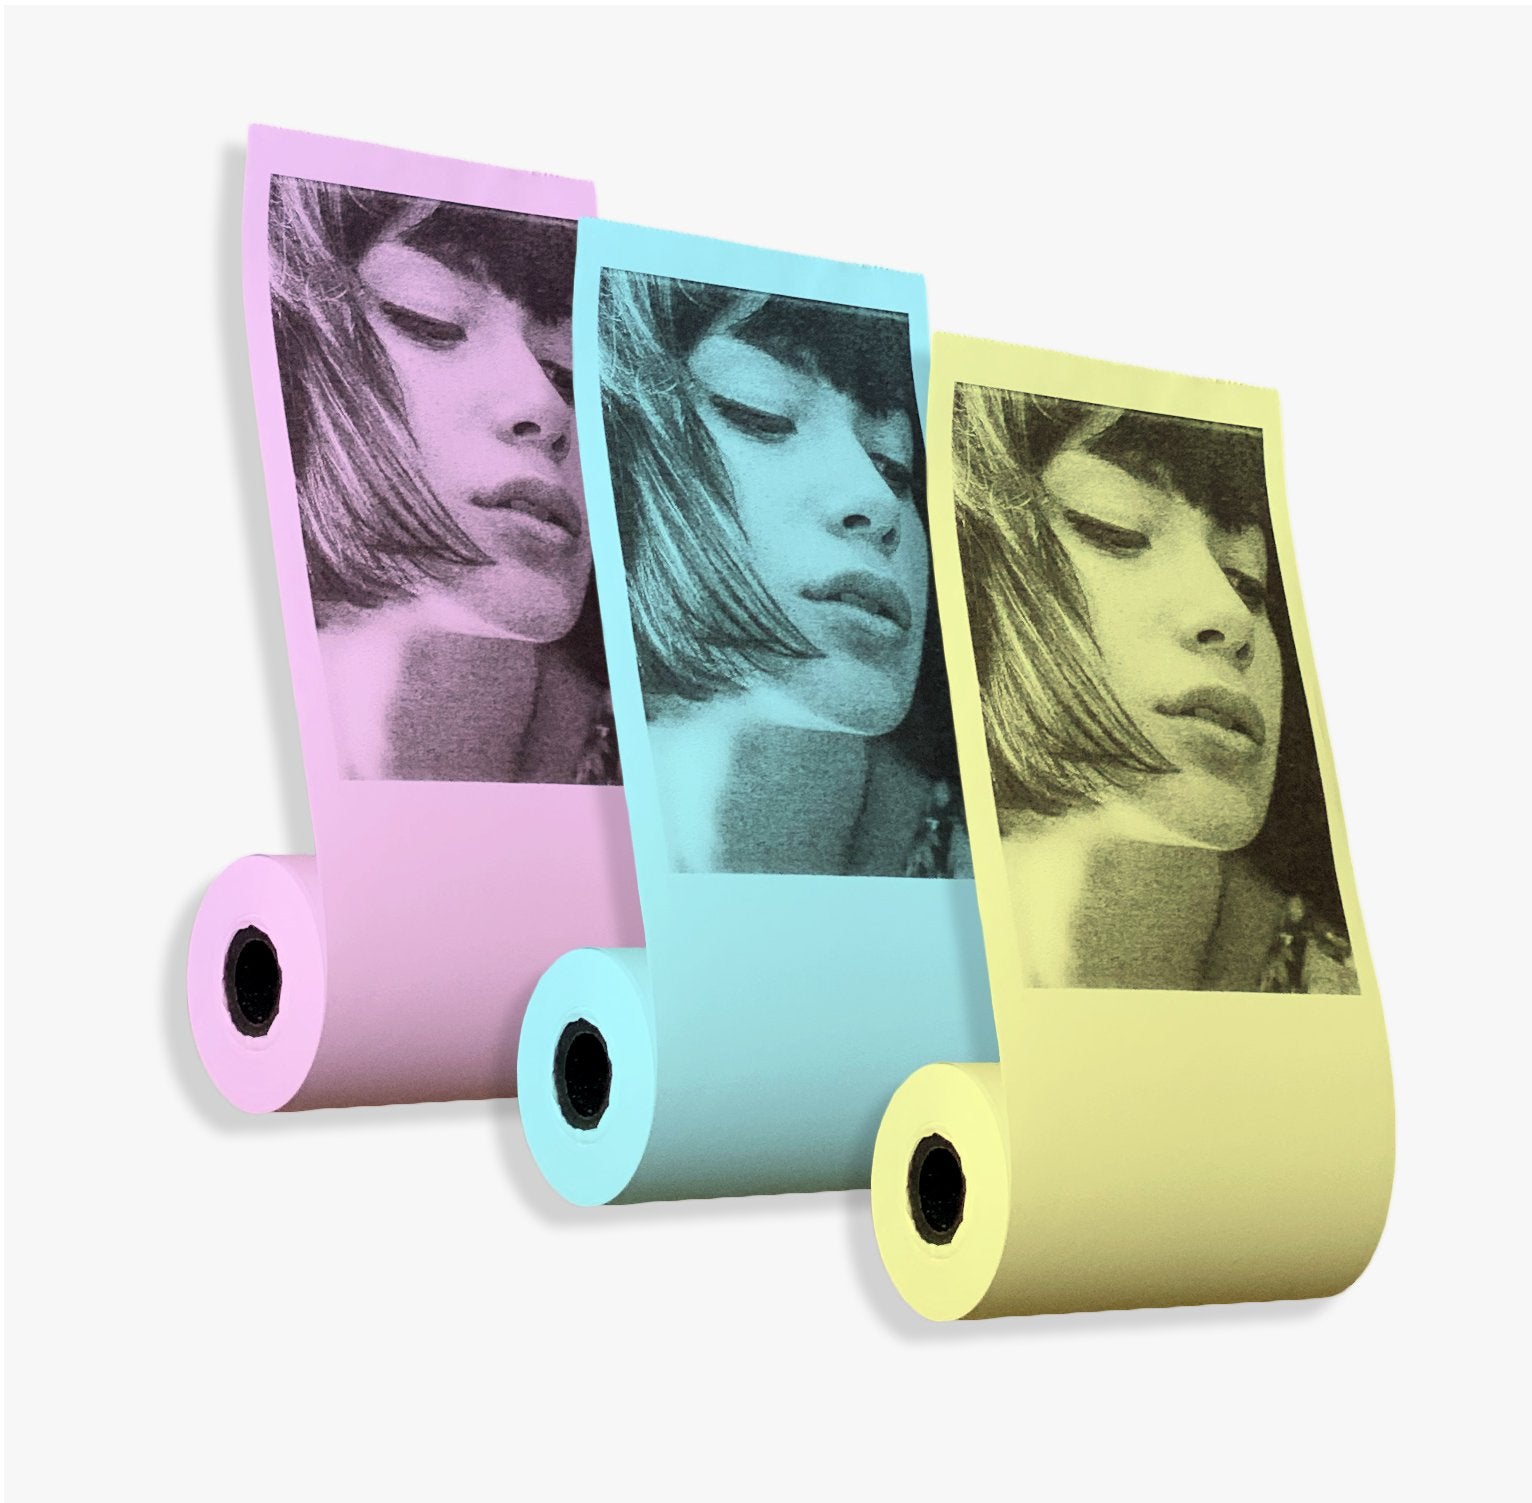 PoooliPaper® Sticky Semi-Transparent Paper 1 Roll (or 3 Rolls)